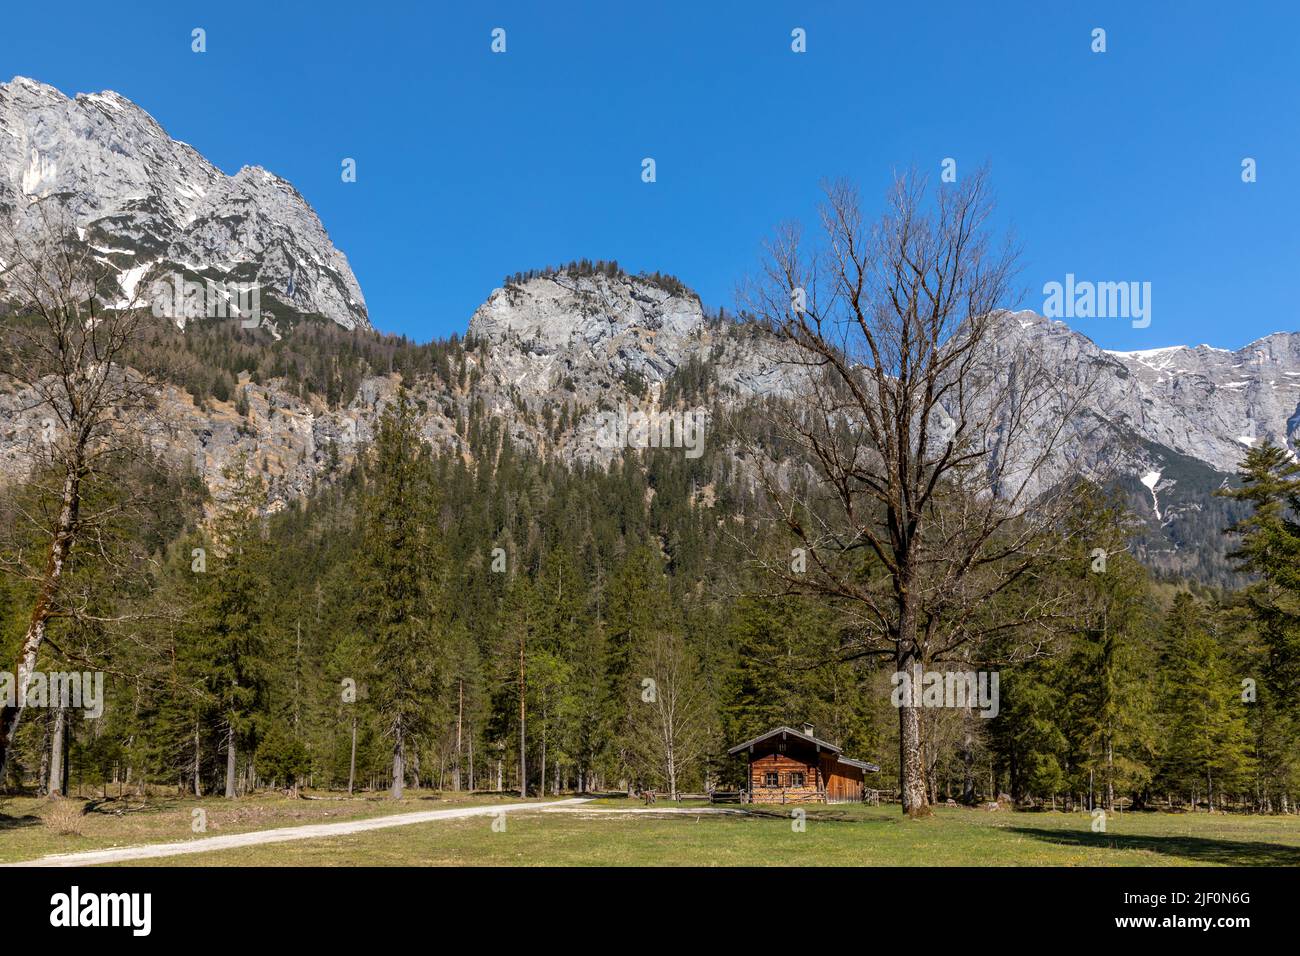 Hut in the Klausbachtal valley near Ramsau, Berchtesgaden, Bavaria, Germany Stock Photo